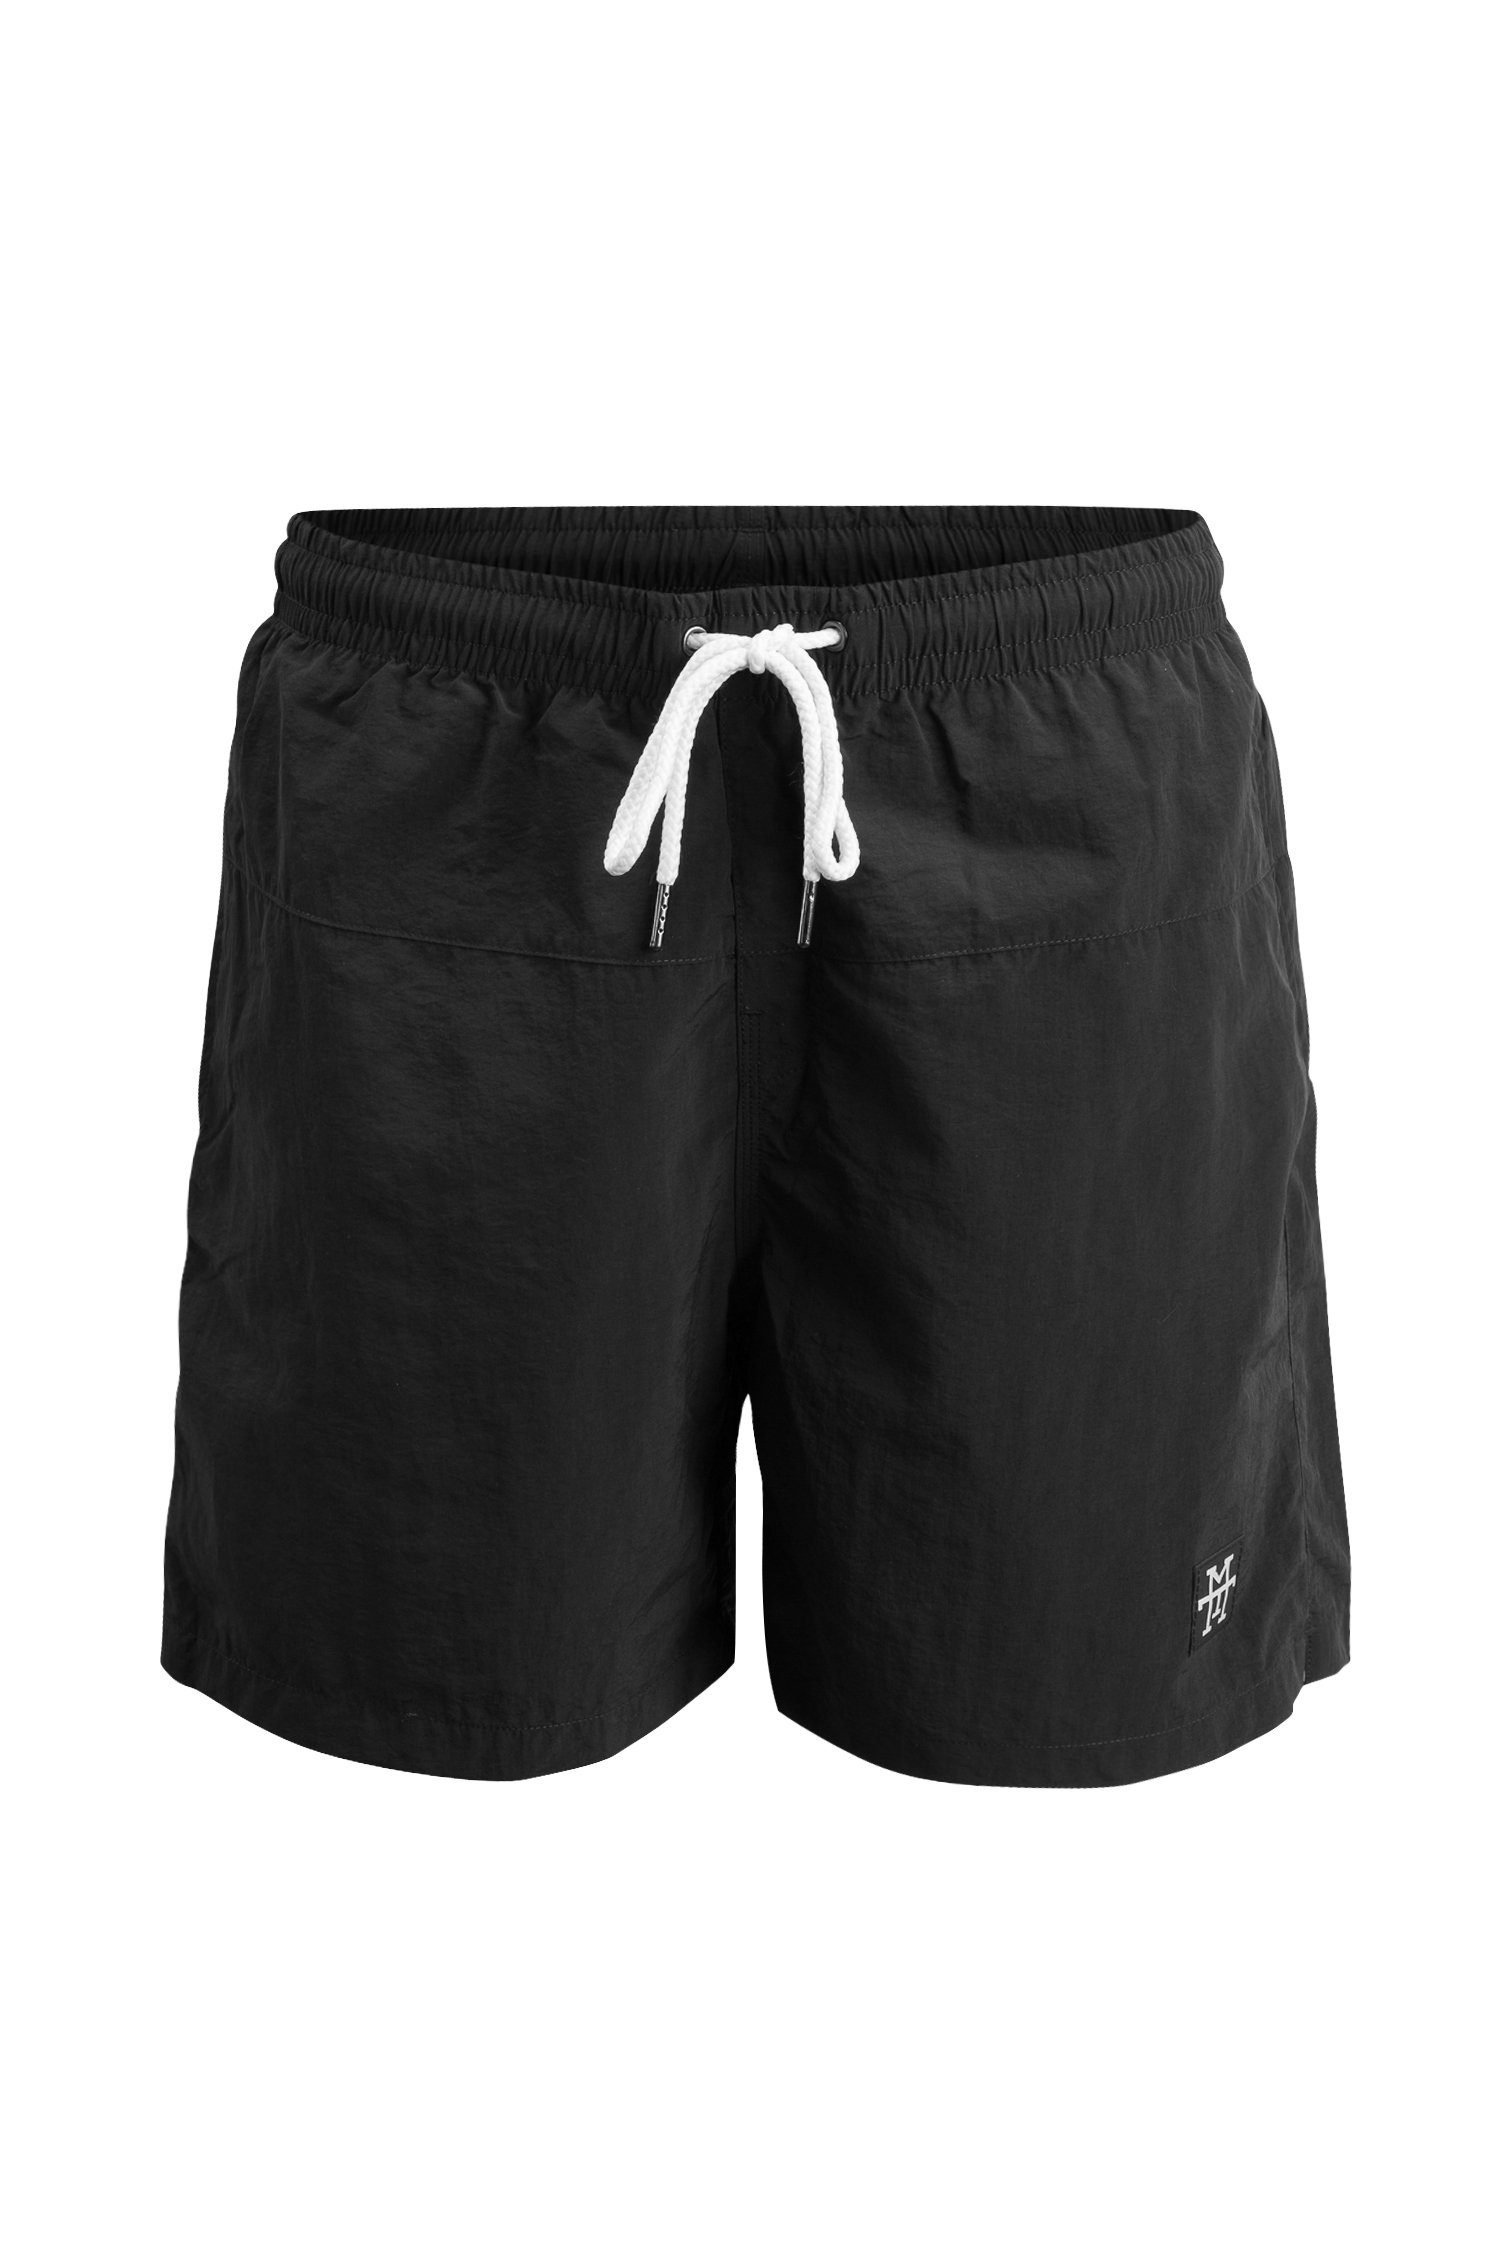 Manufaktur13 Badeshorts Swim Shorts - Badehosen schnelltrocknend Black Out